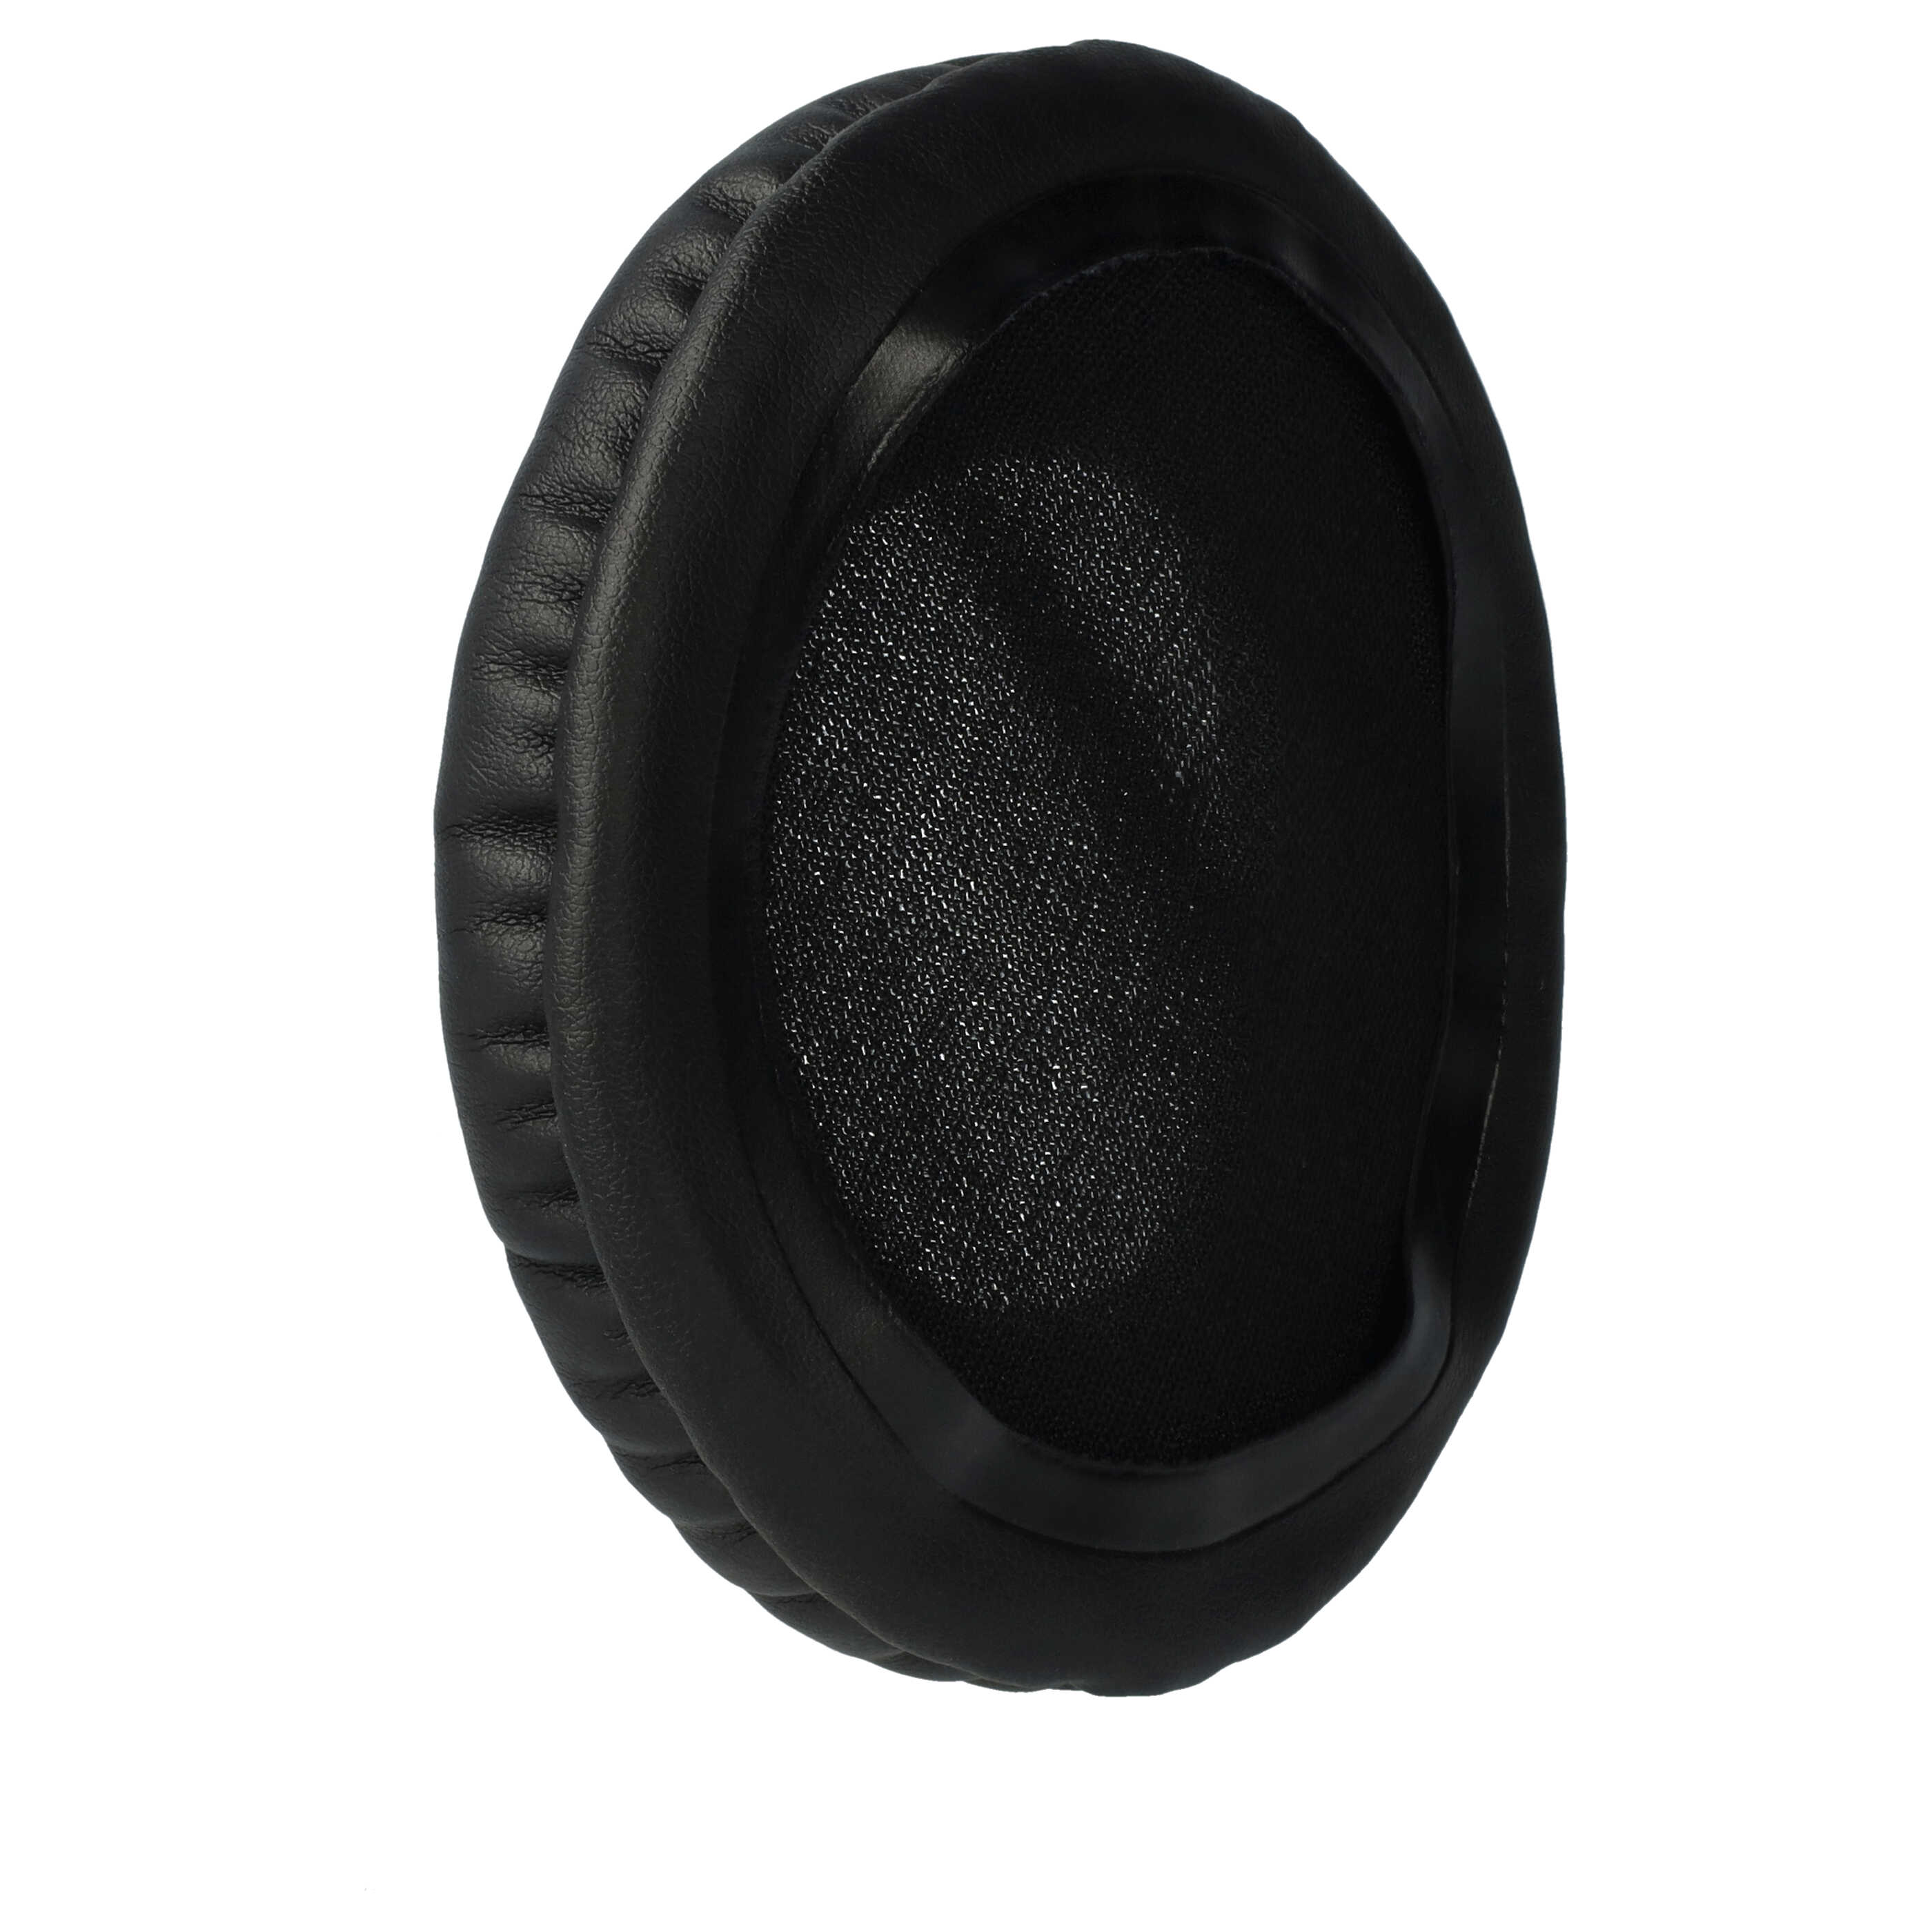 2x Ear Pads suitable for Technics RP-DH1200 Headphones etc. - with Memory Foam, polyurethane / foam, 17 mm thi